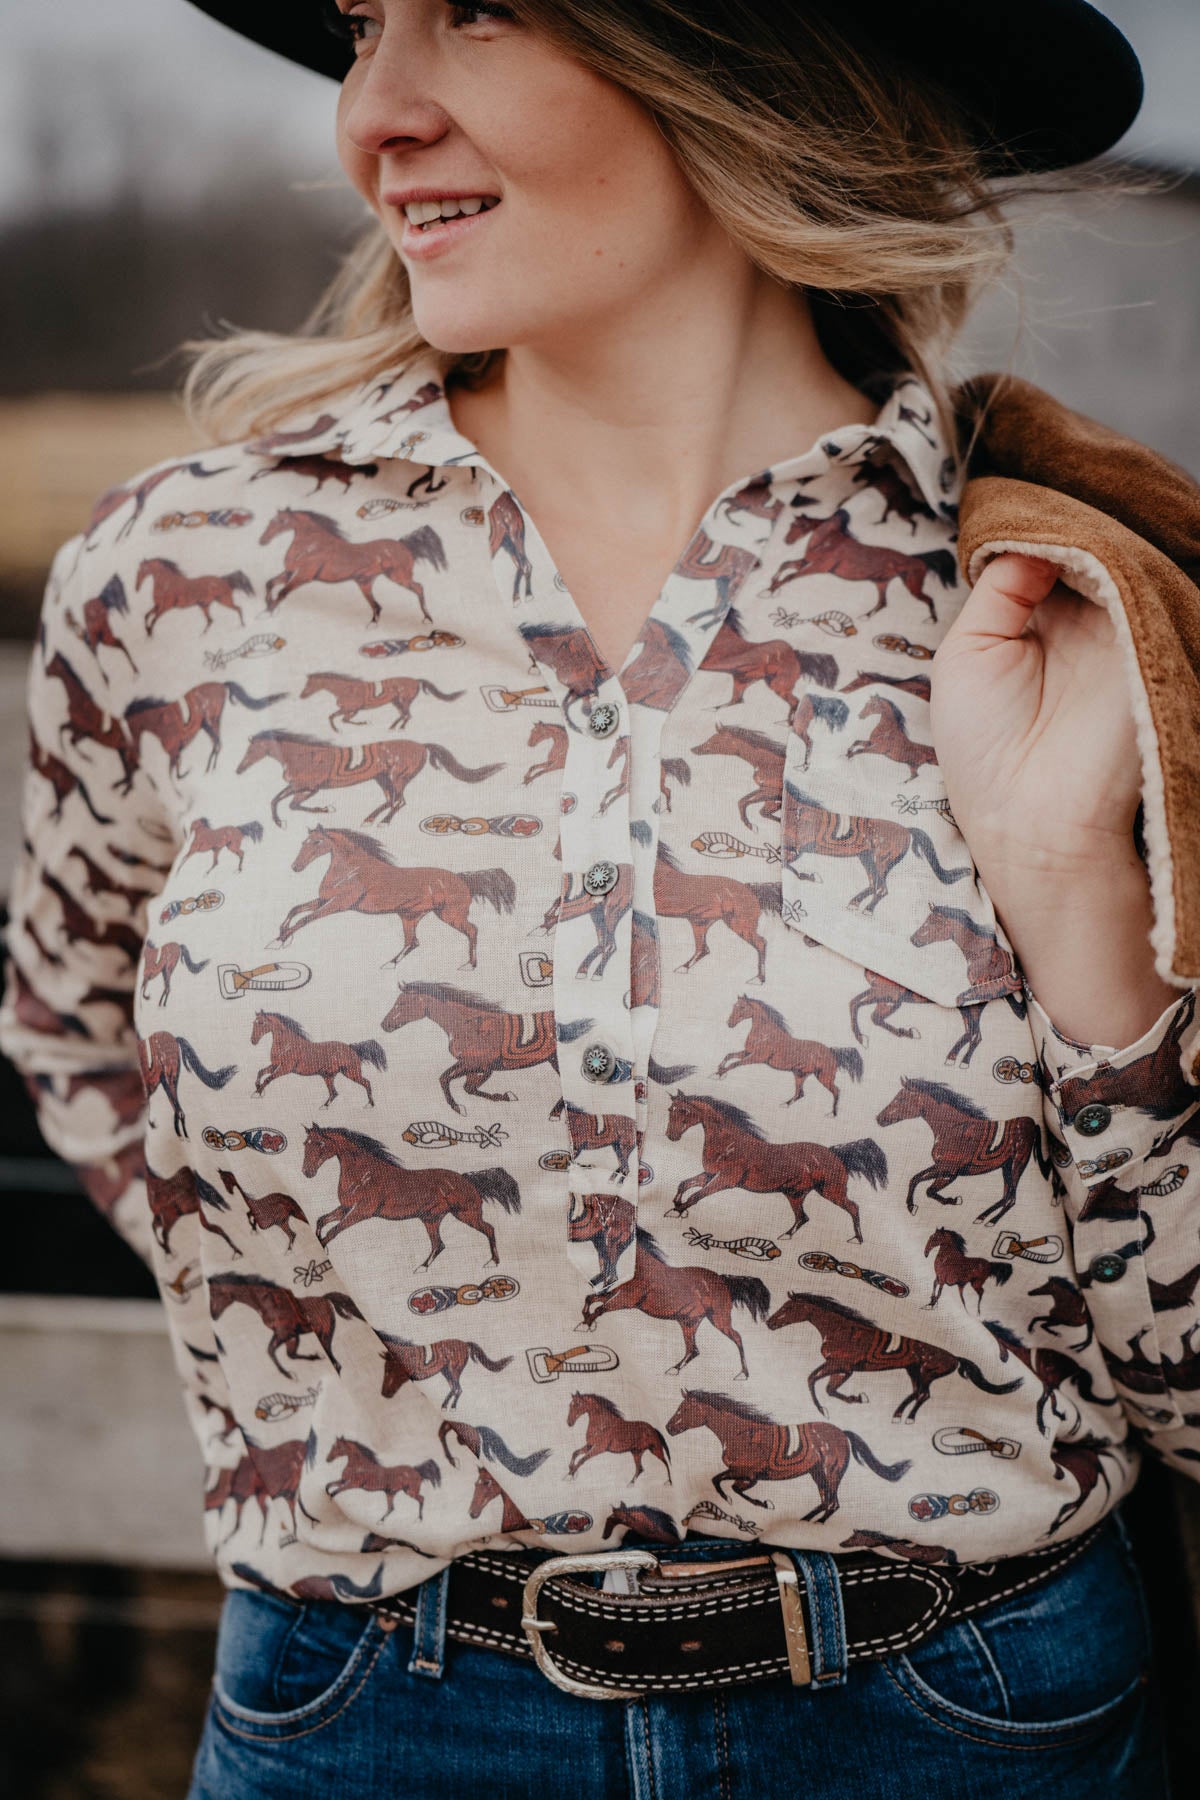 'Old Town' Horse Print Shirt by Tasha Polizzi (S - XL)